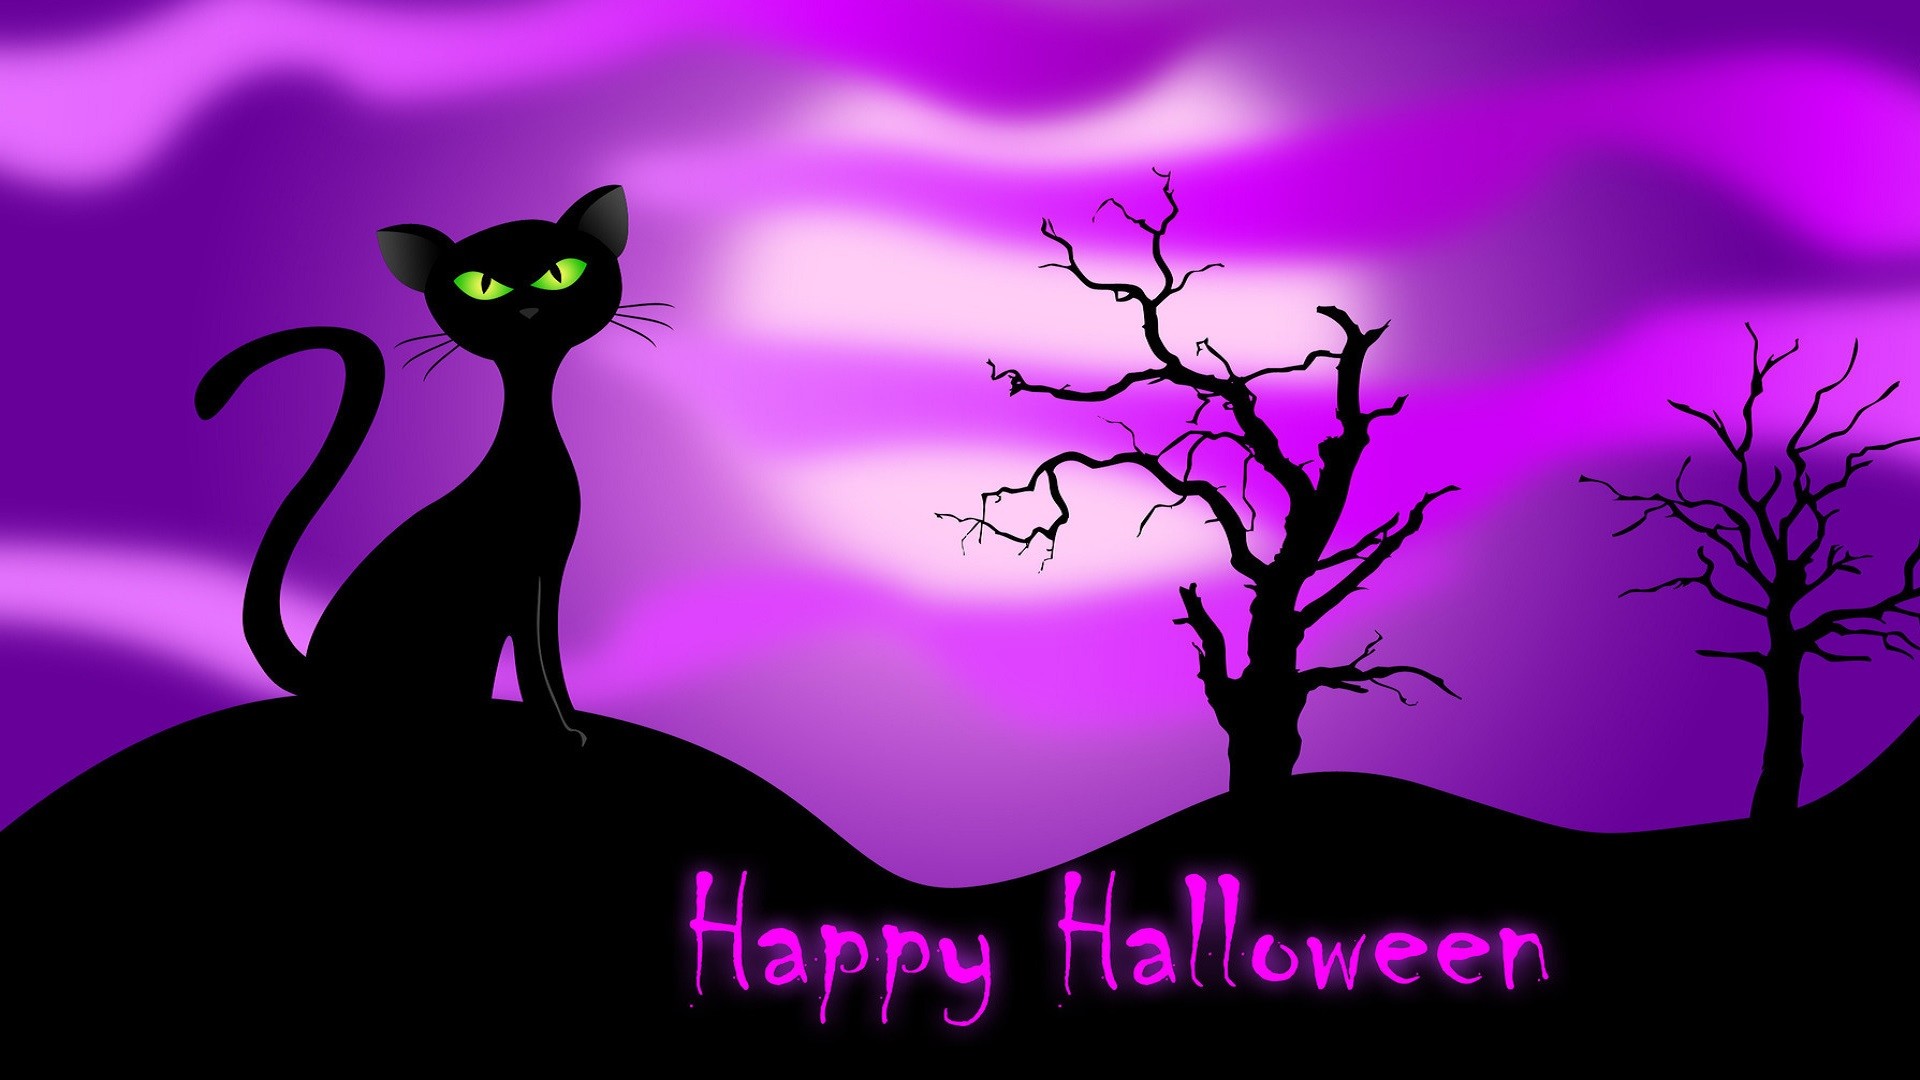 1920x1080 Black Cat Vector Halloween Wallpaper #4952 Wallpaper Themes ... Black Cat  Vector Halloween Wallpaper 4952 Wallpaper Themes